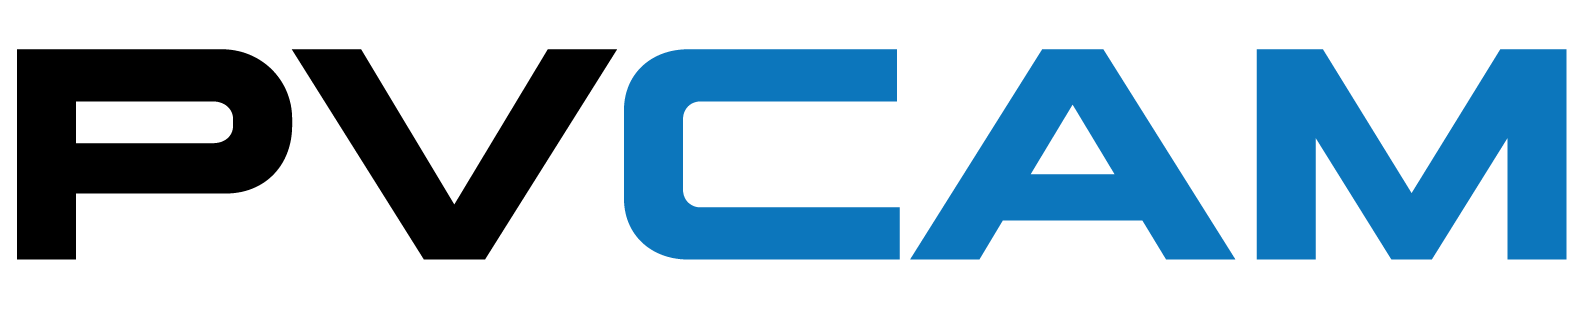 PVCAM logo